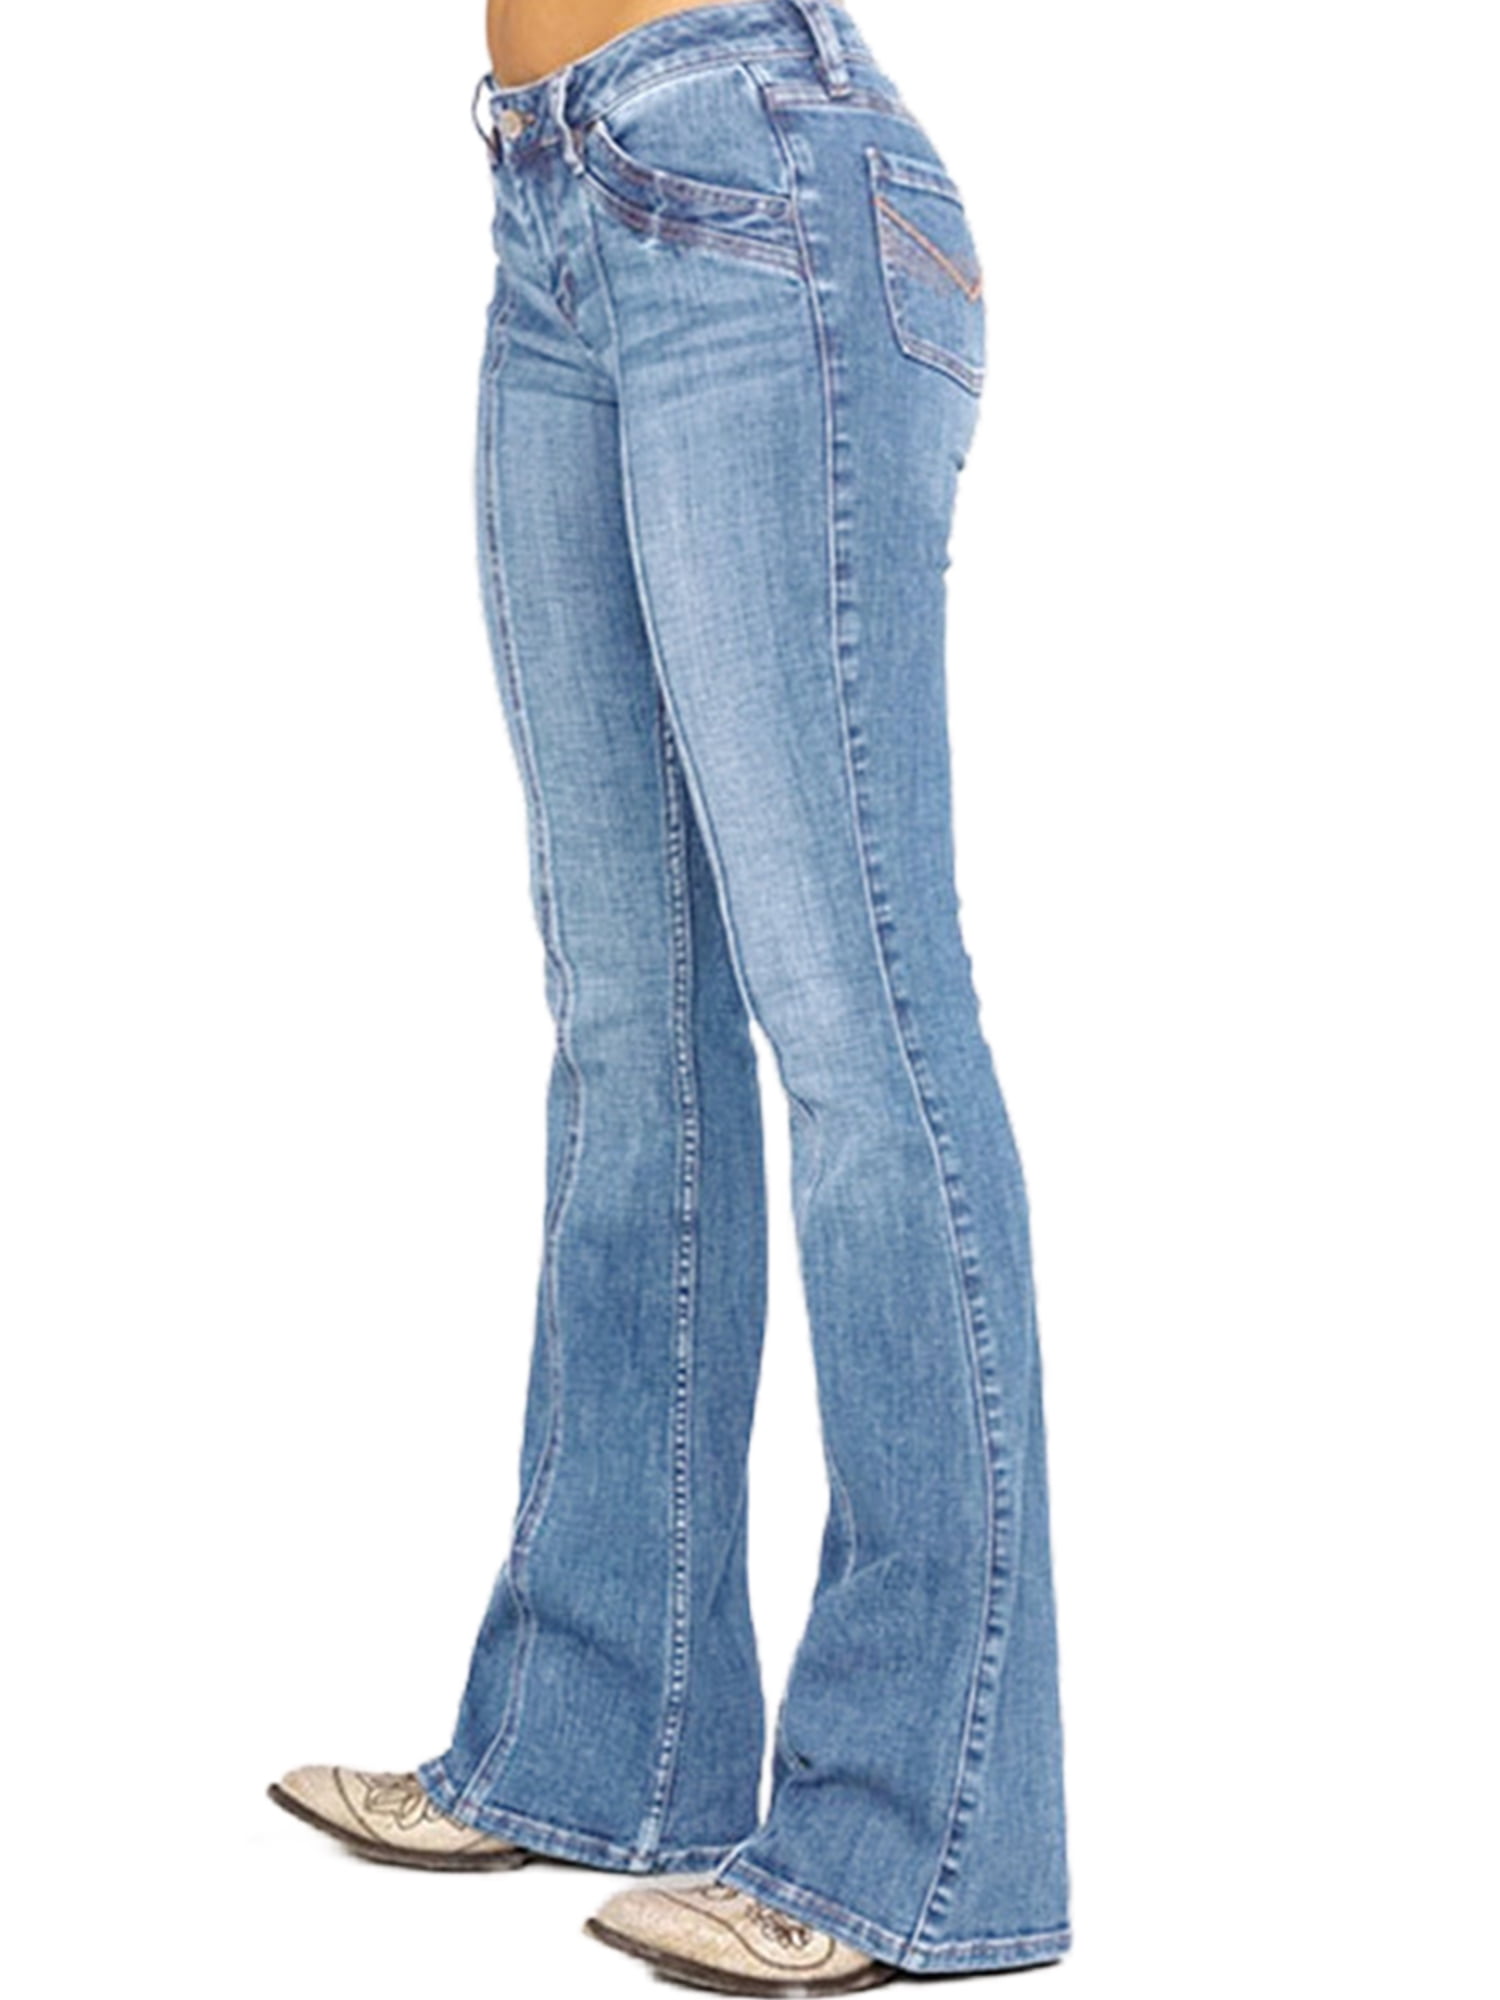 Capreze Women Buttoned Bootcut Jeans Casual Flare Denim Pants Bell Bottom  Jeans with Pockets Light Blue 3XL 